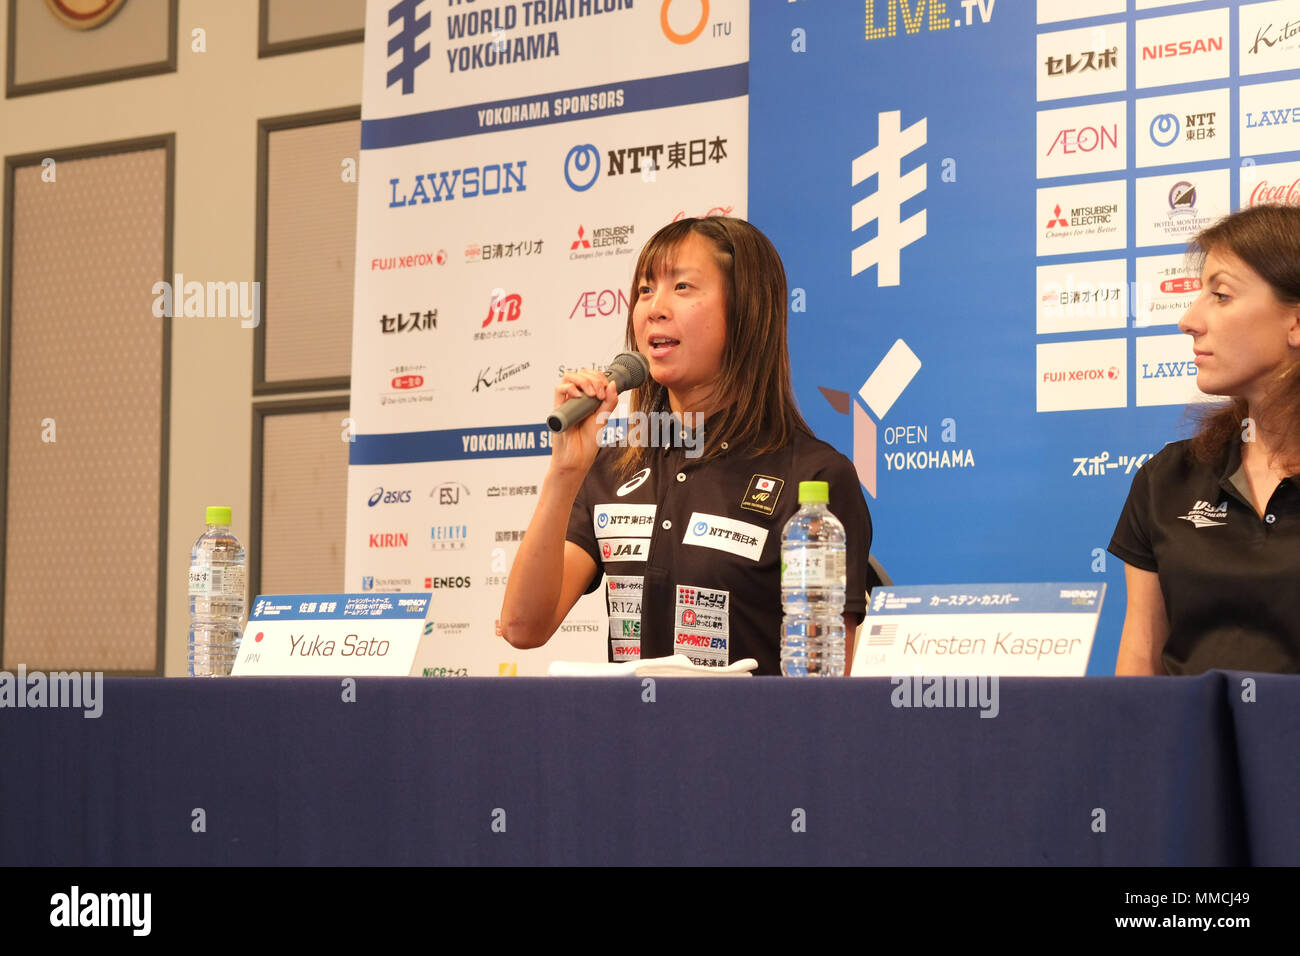 2018/05/10 Yokohama, Pressekonferenz der ITU World Triathlon Yokohama im Monterey Hotel. Yuka Sato Jpn, Kirsten Kasper USA (Fotos von Michael Steinebach/LBA) Stockfoto